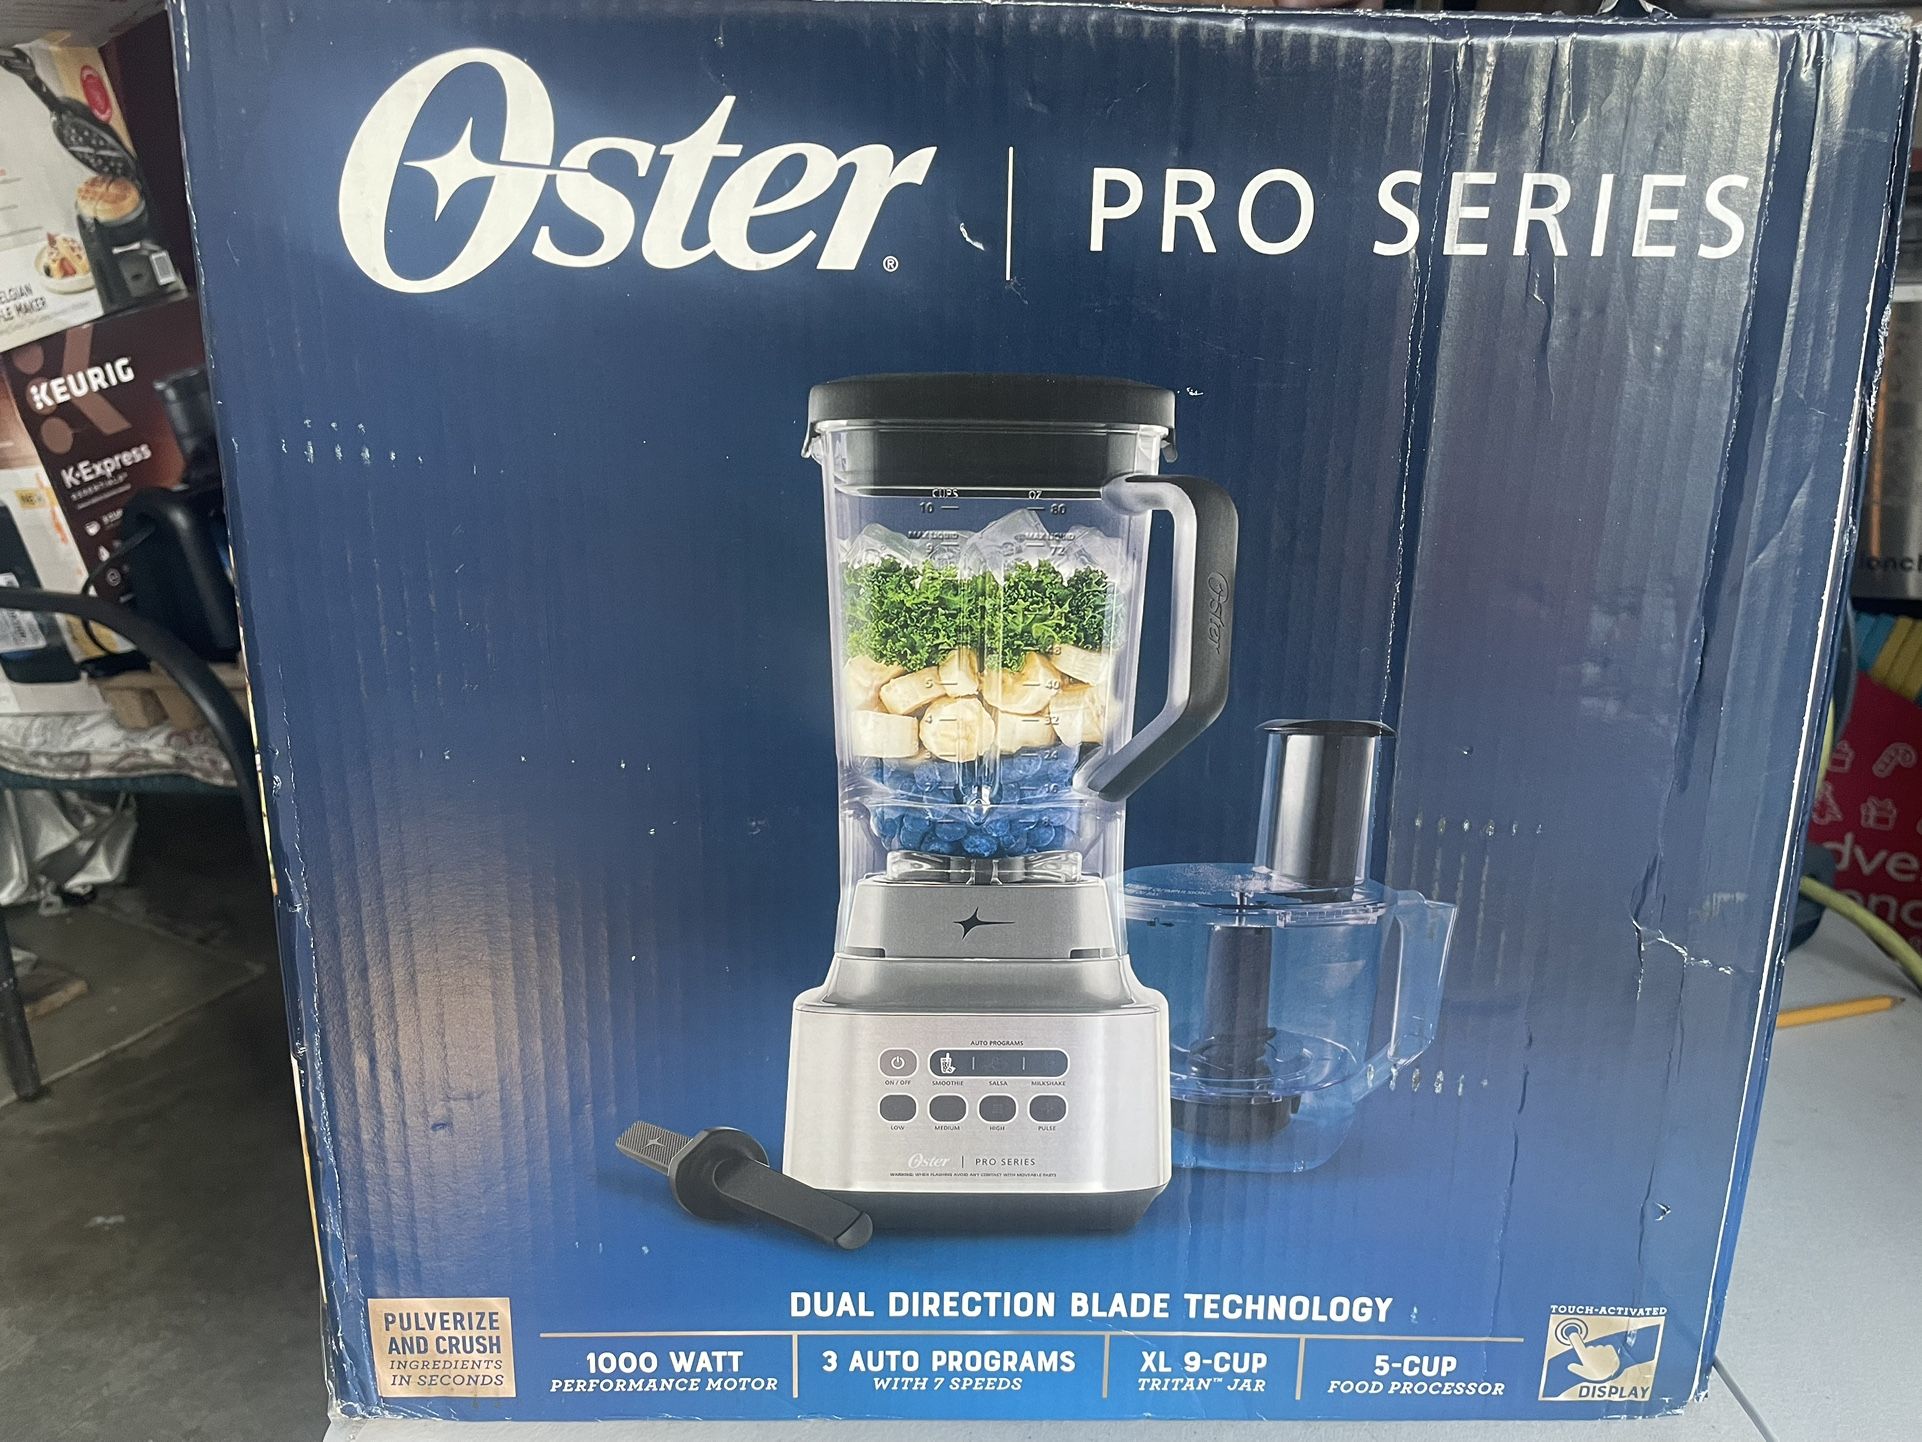 Oster Pro Series Blender 